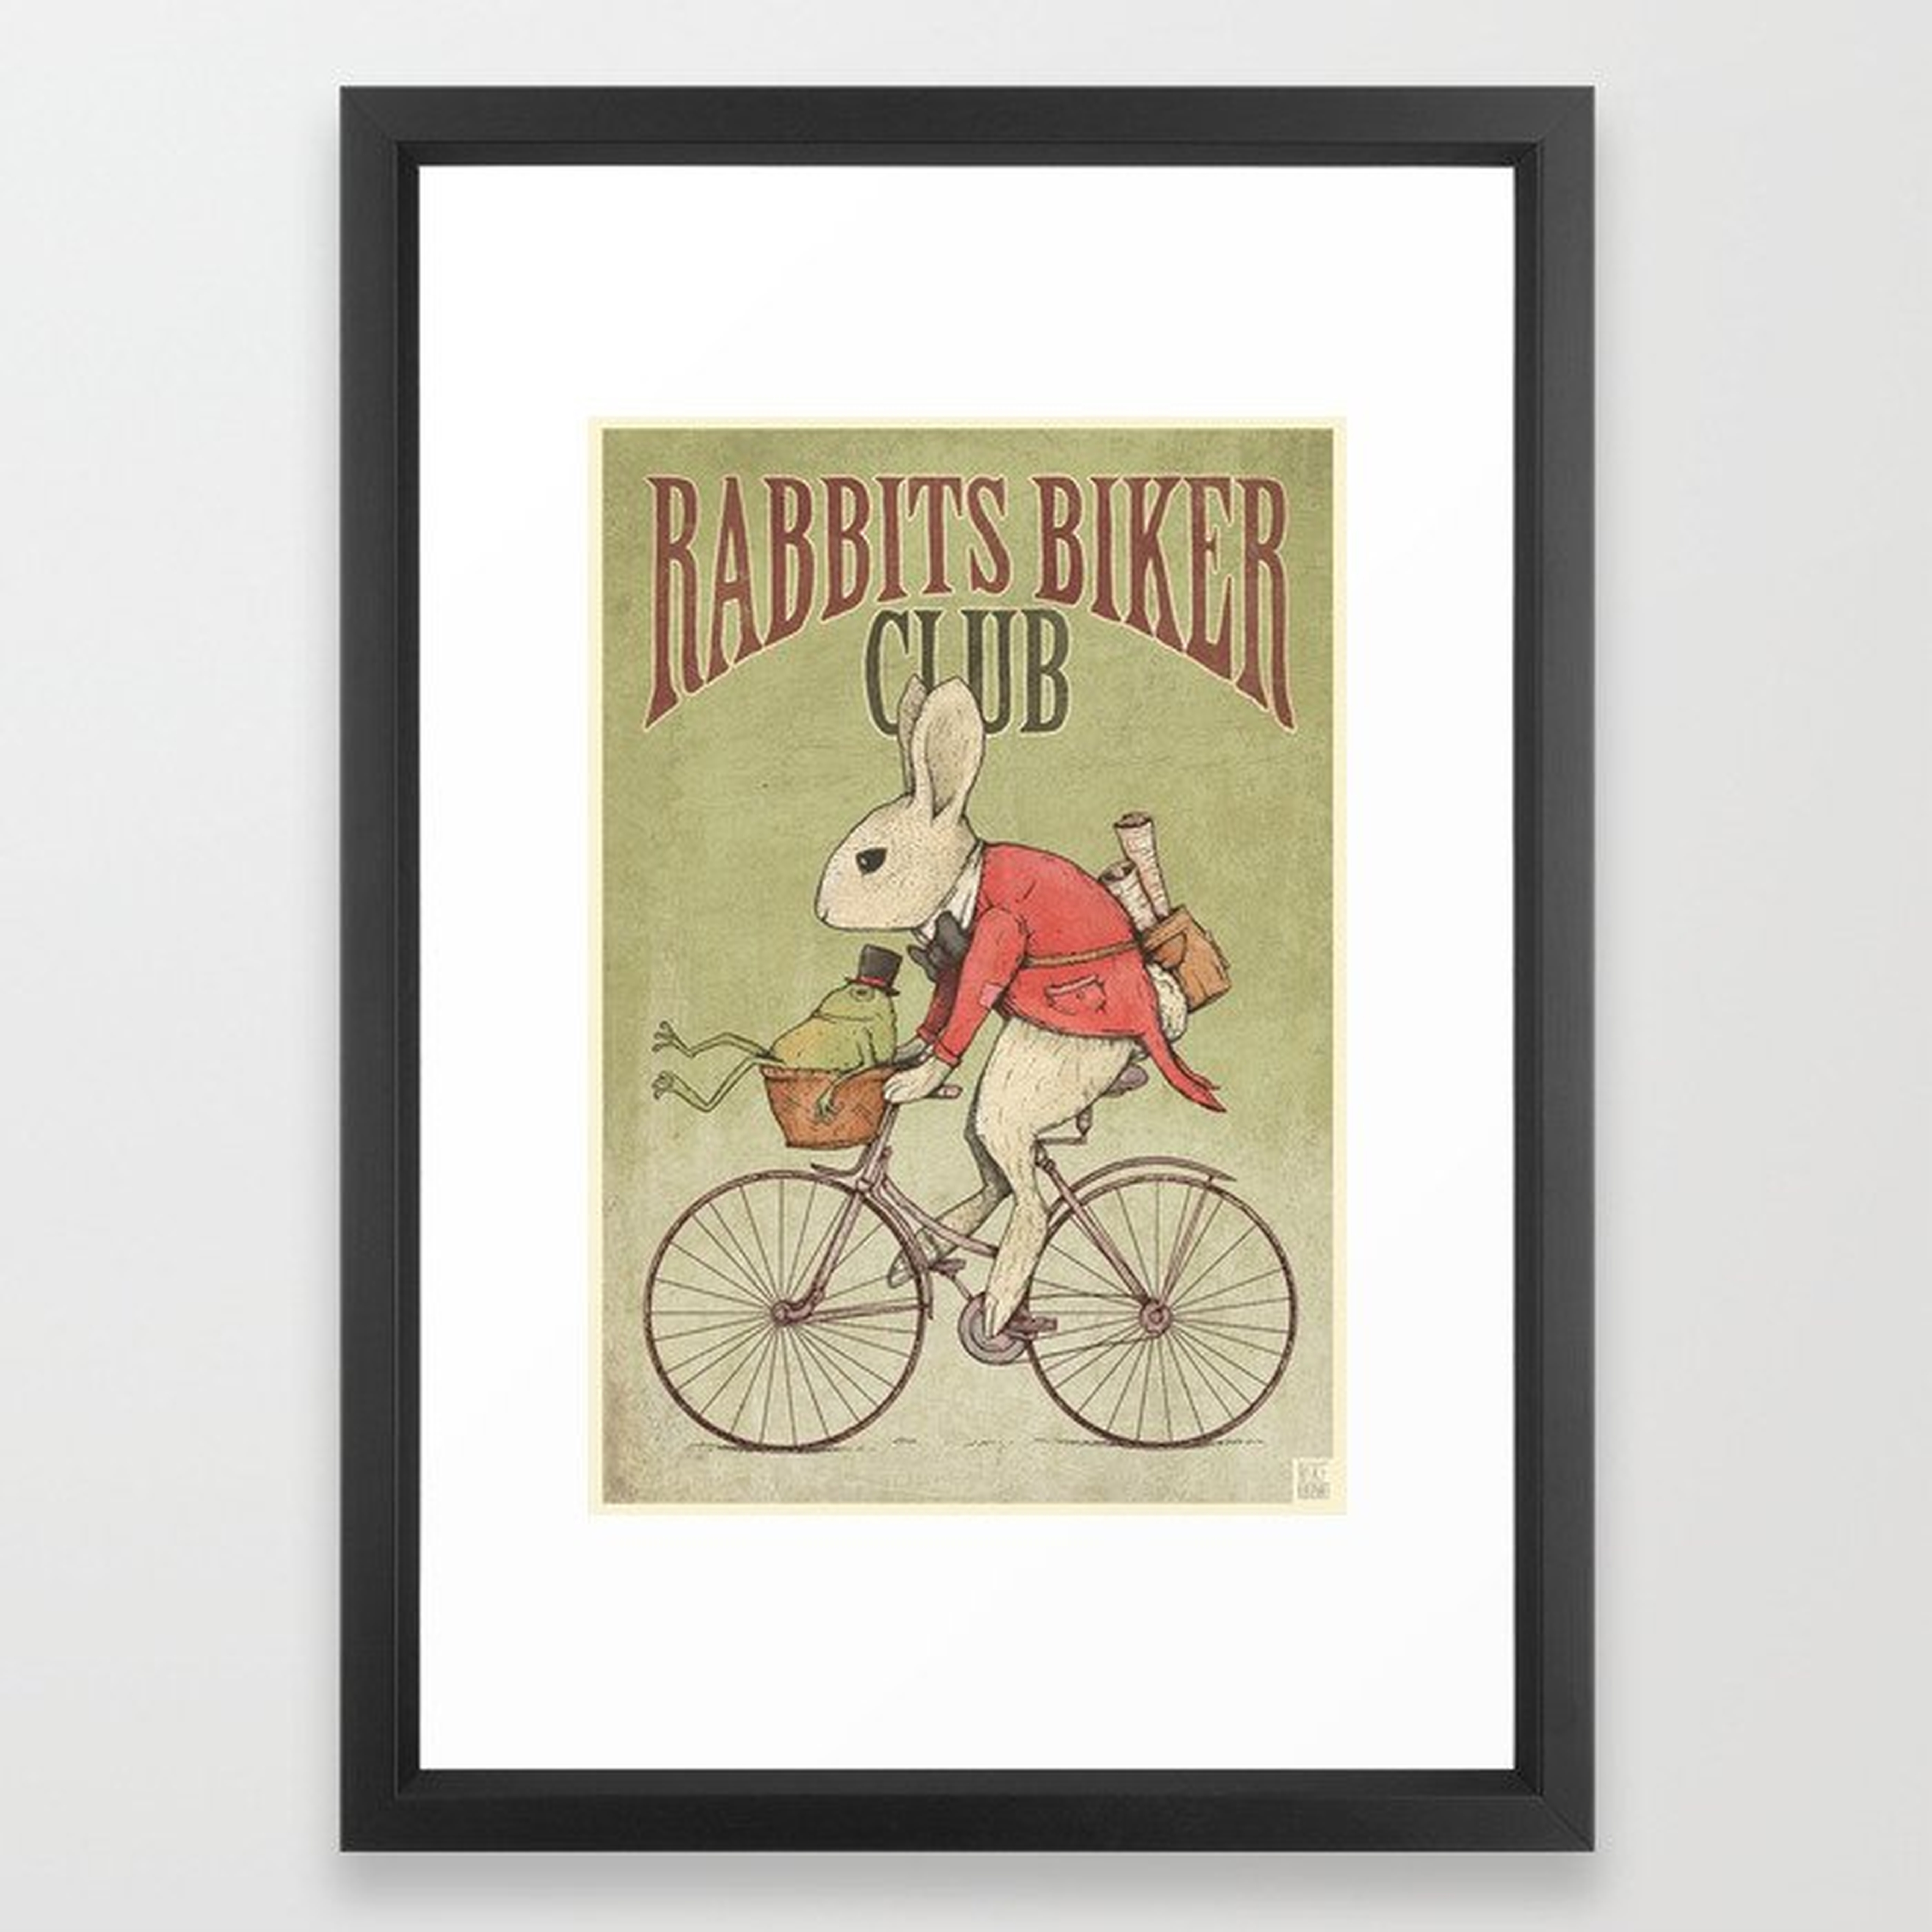 Rabbits Biker Club Framed Art Print - Society6